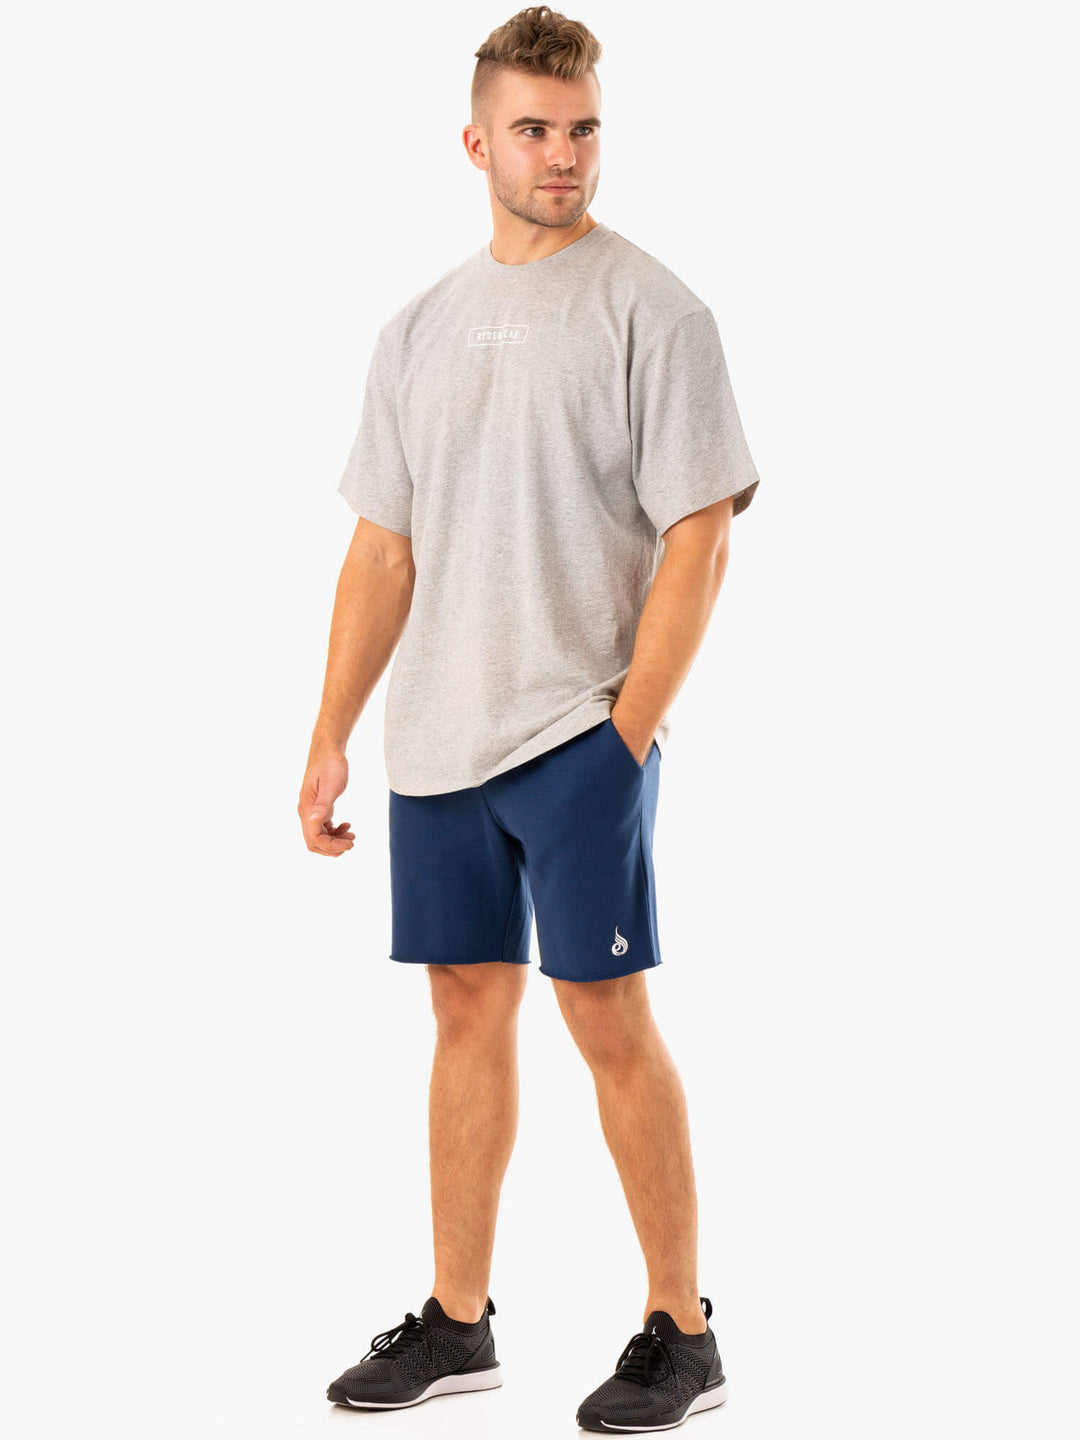 Recharge Track Gym Short - Blue Clothing Ryderwear 